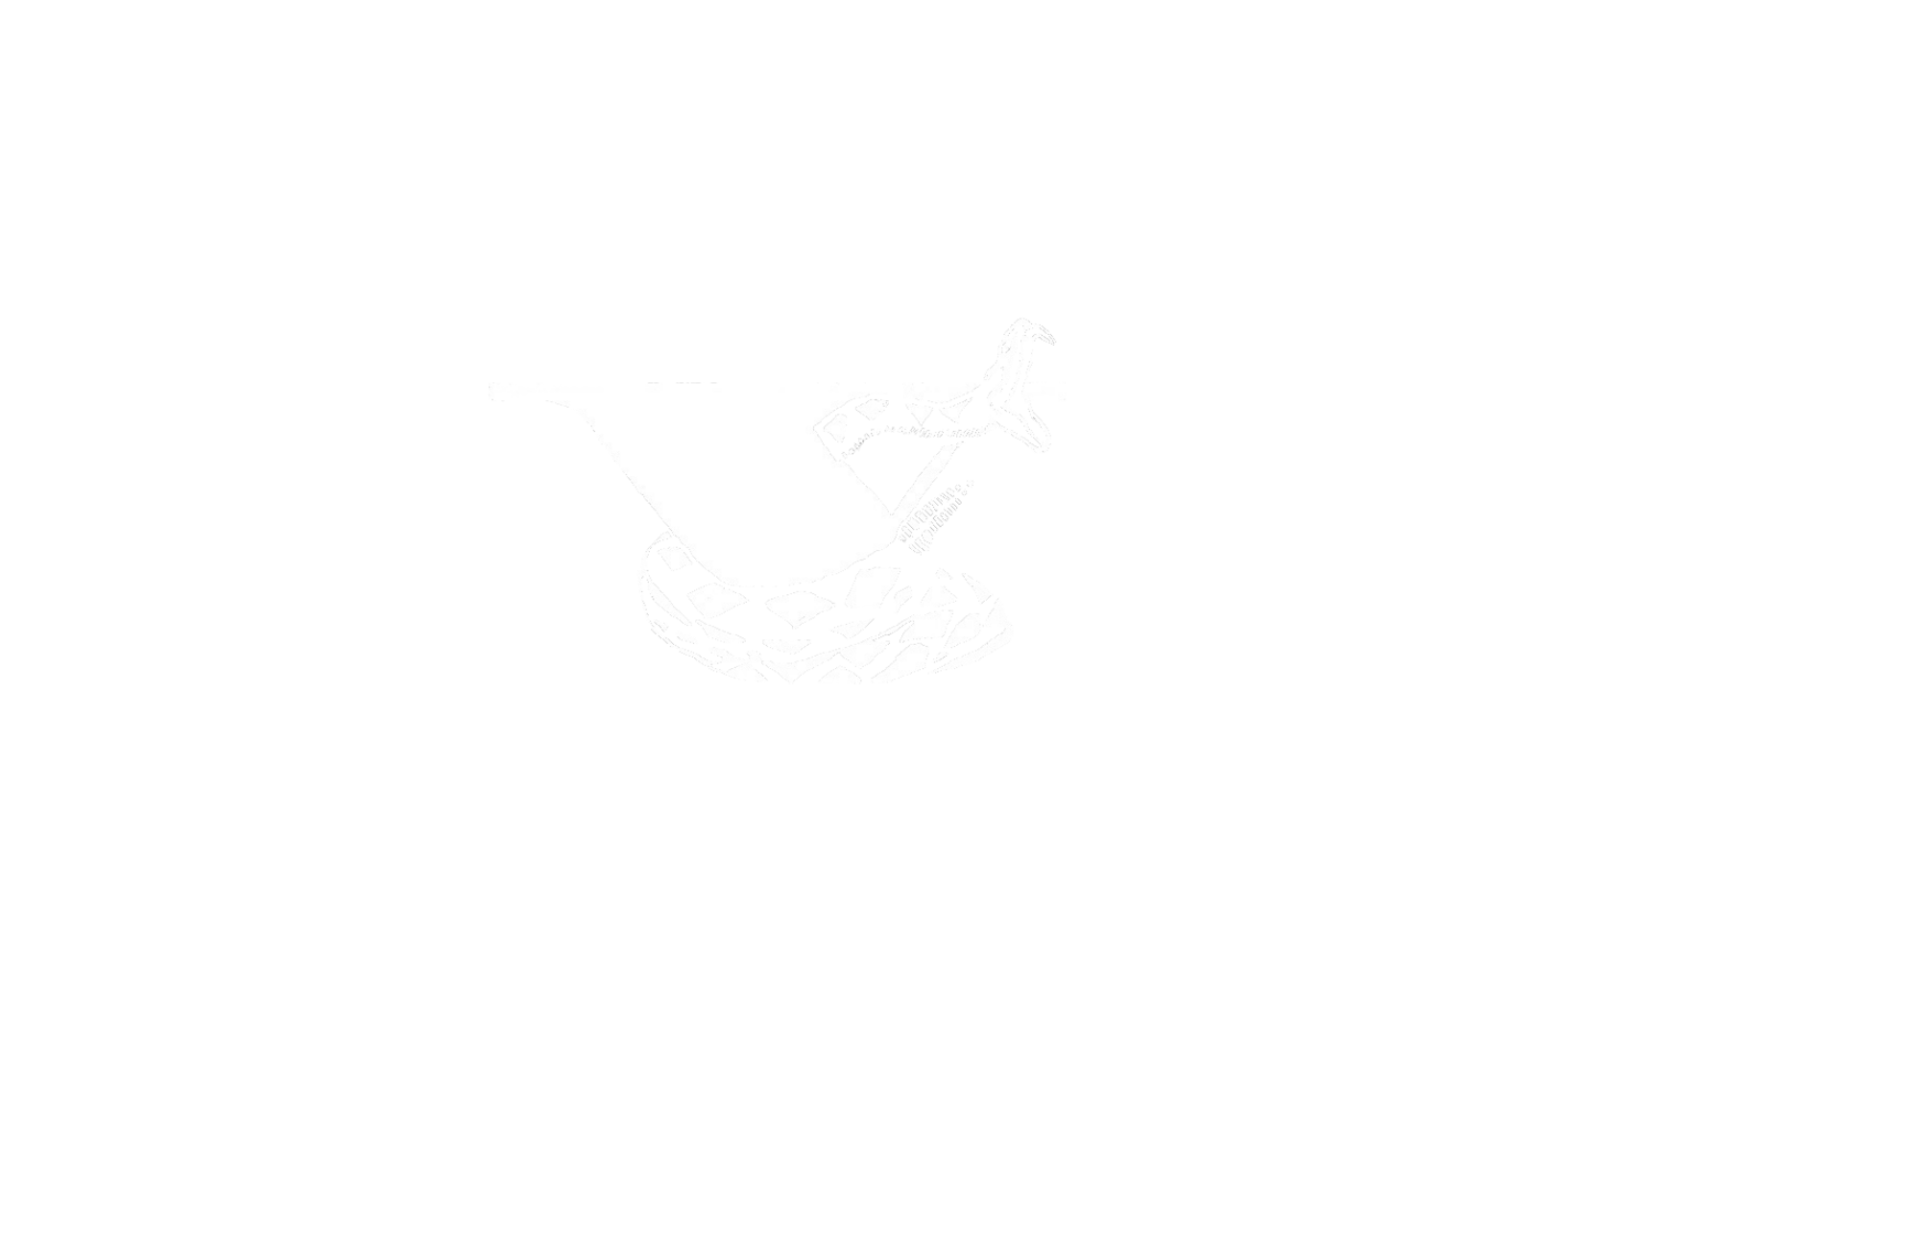 Venom Central's Serpent Center